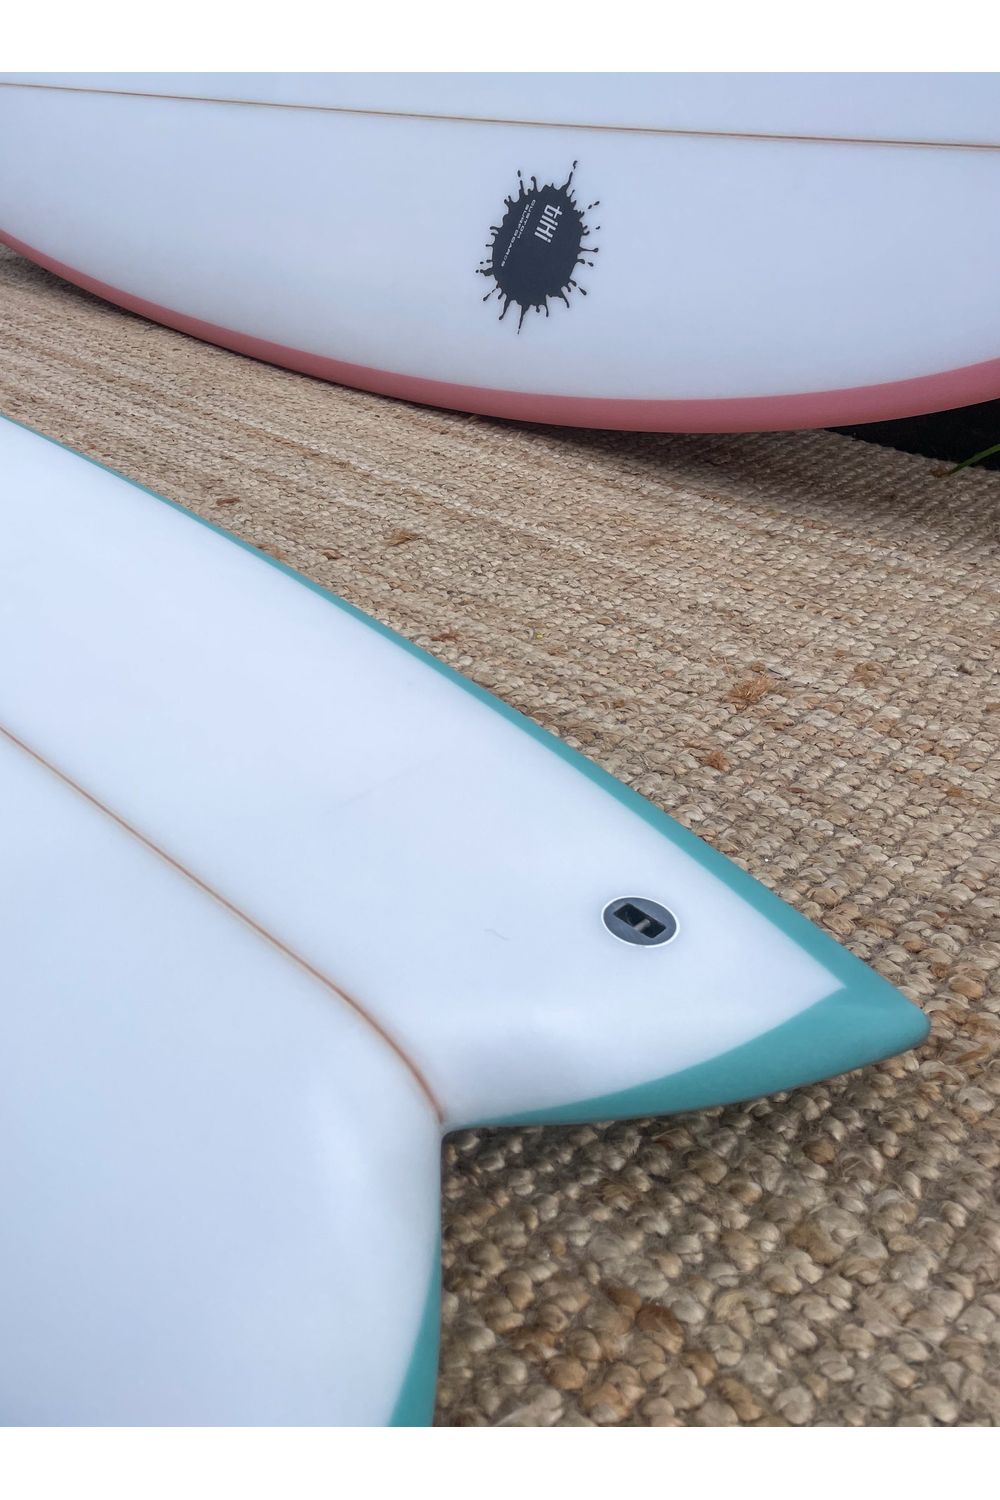 Tiki Custom Surfboard - 5'10 Parrot Twin - Pink